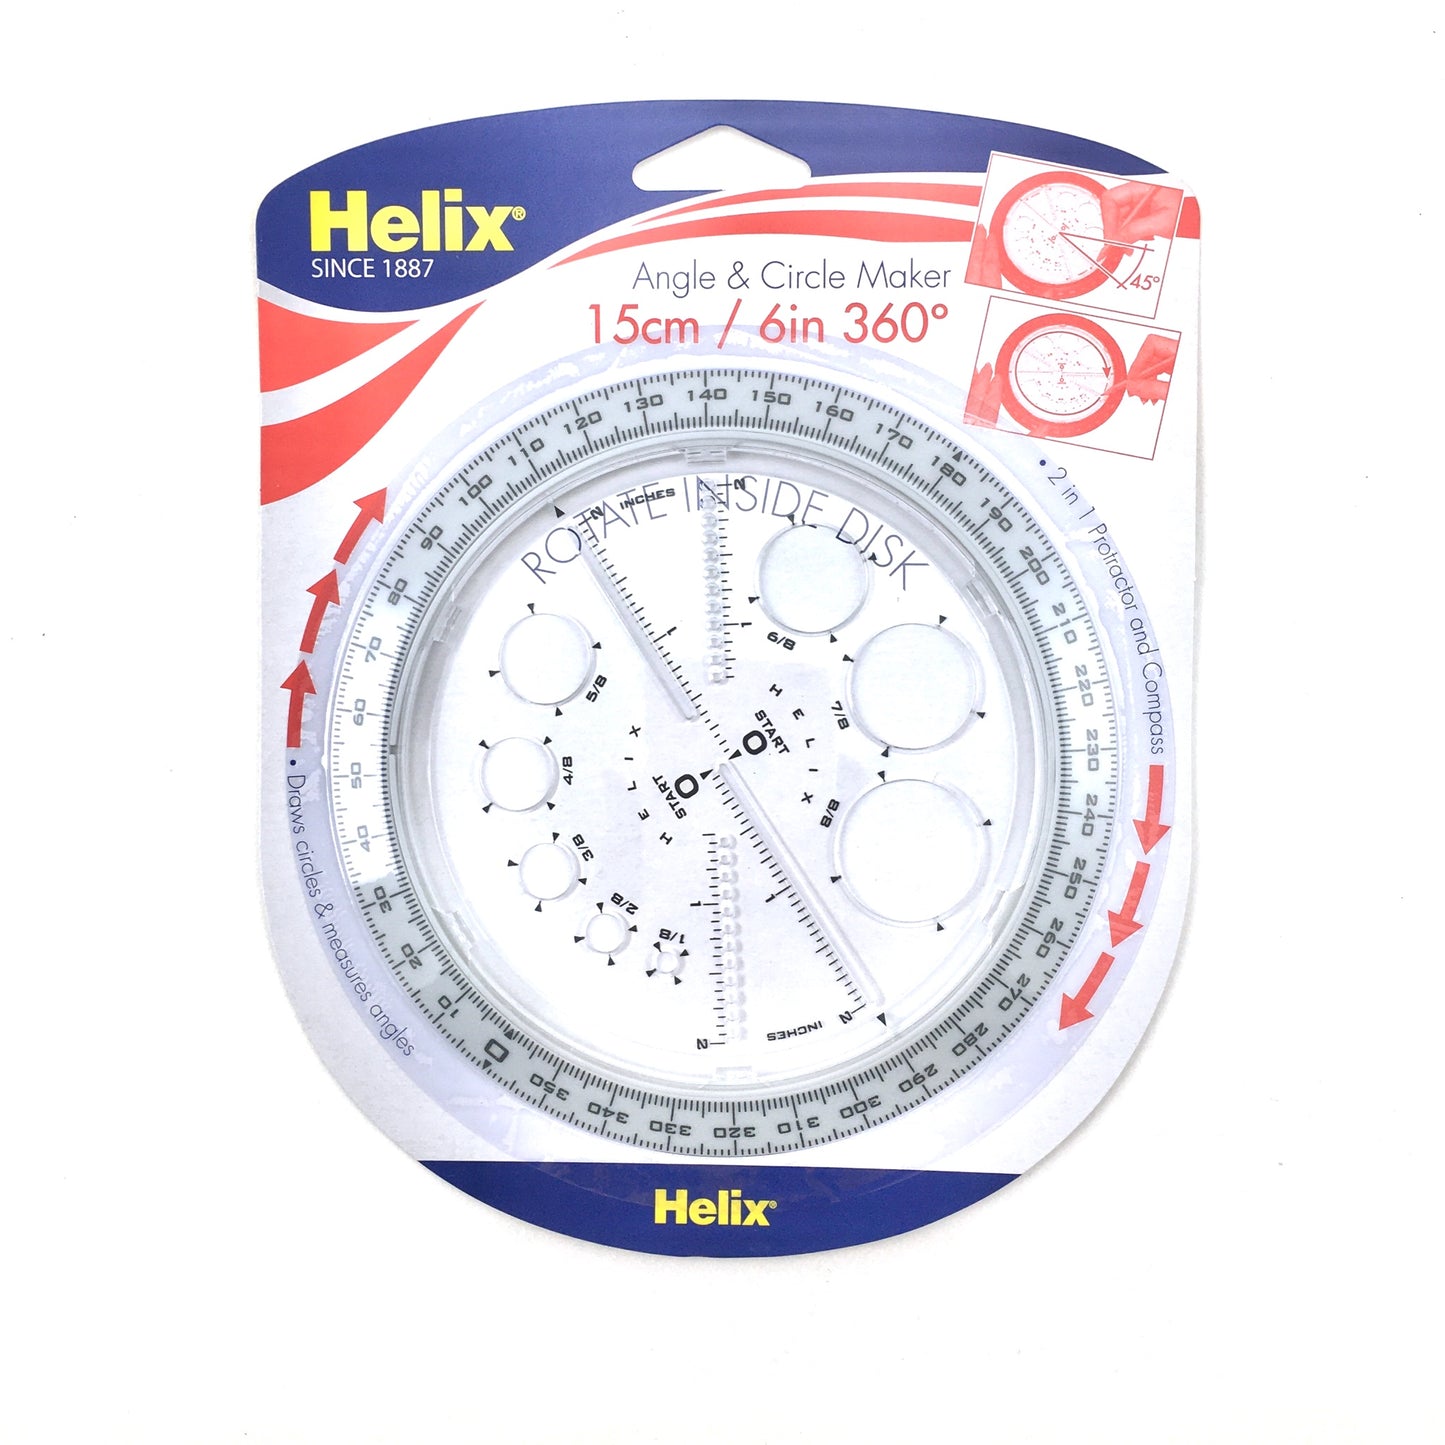 Helix Angle & Circle Maker - White by Helix - K. A. Artist Shop